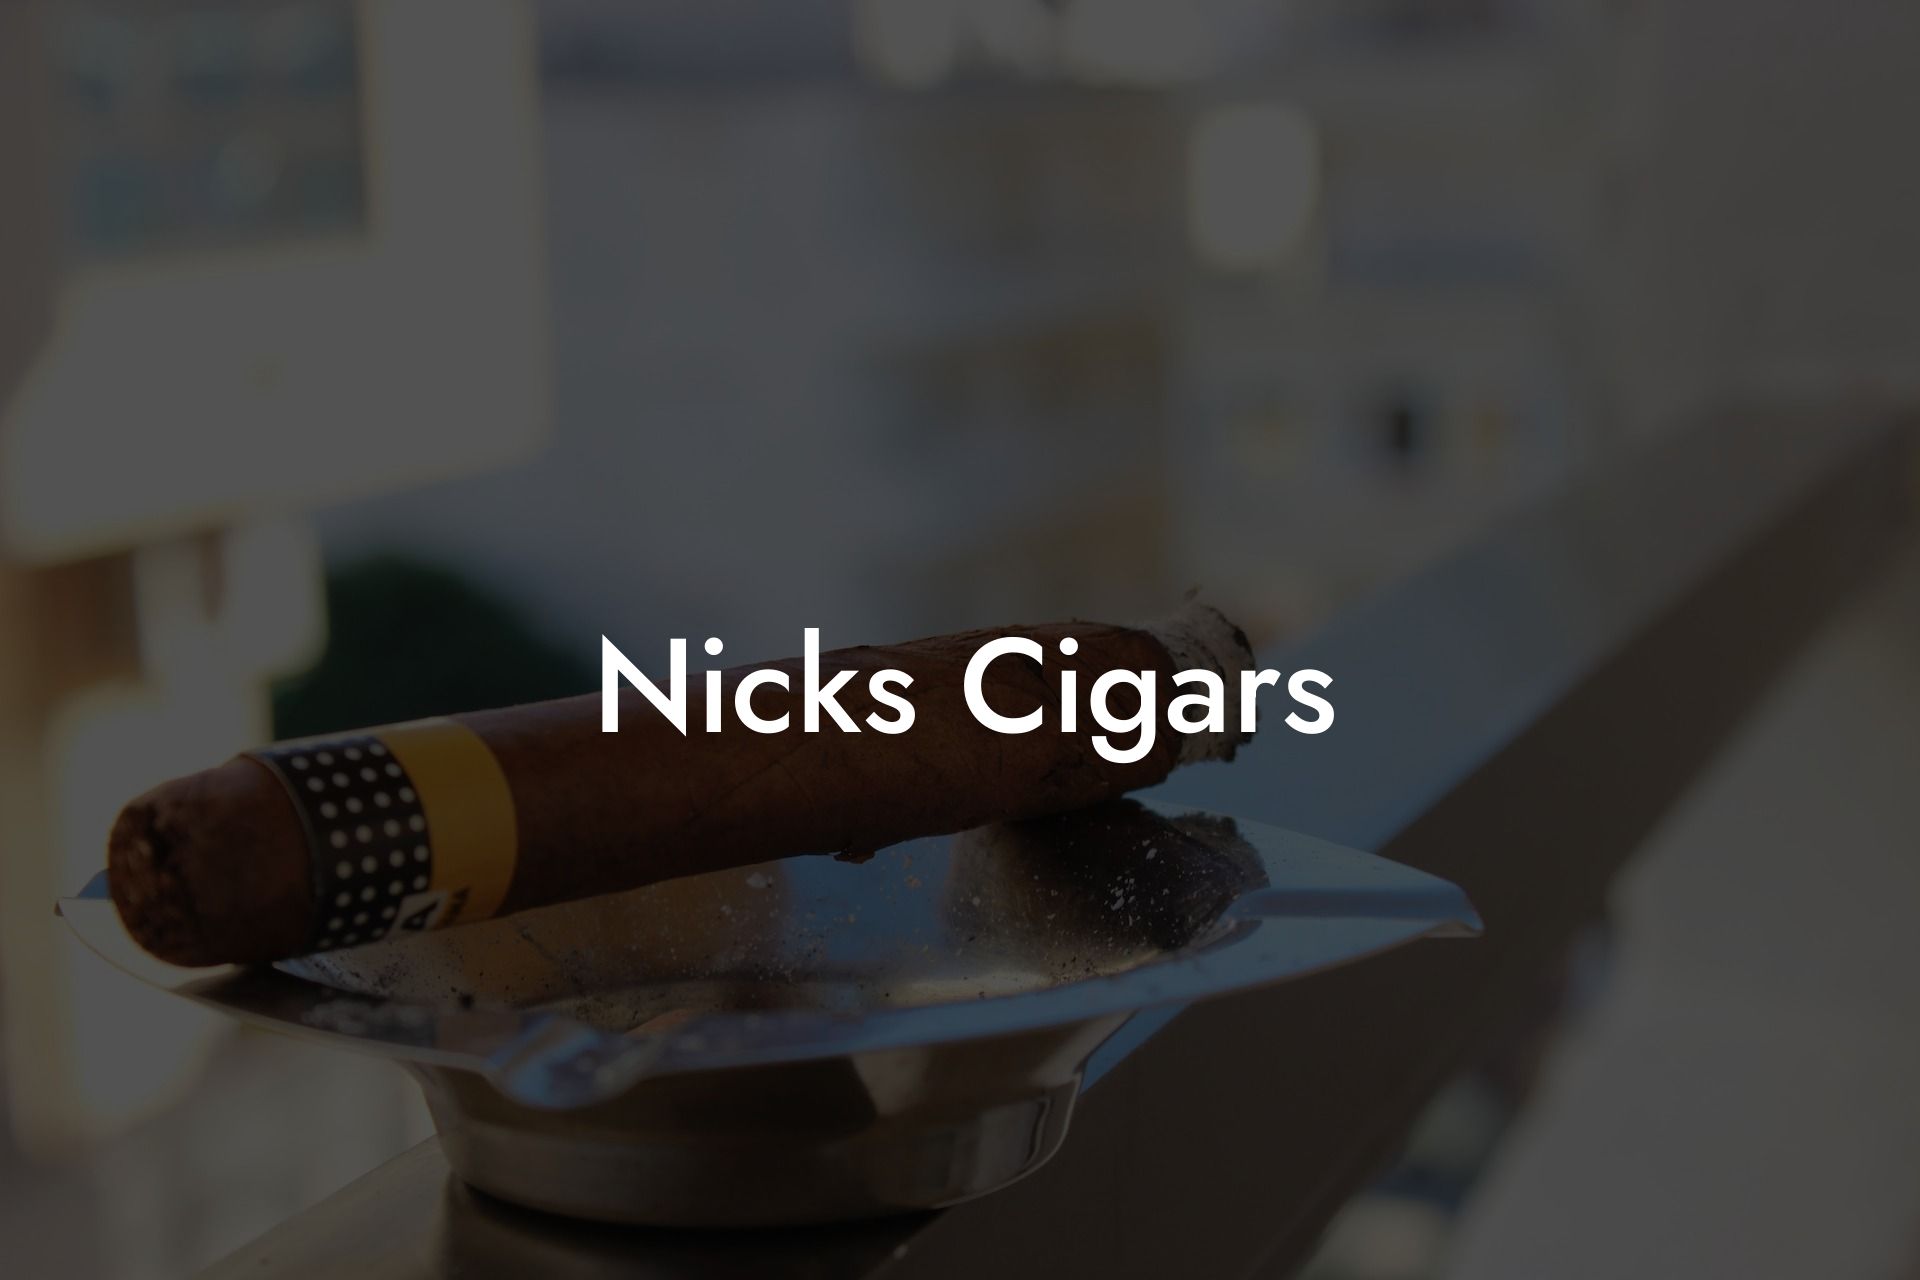 Nicks Cigars